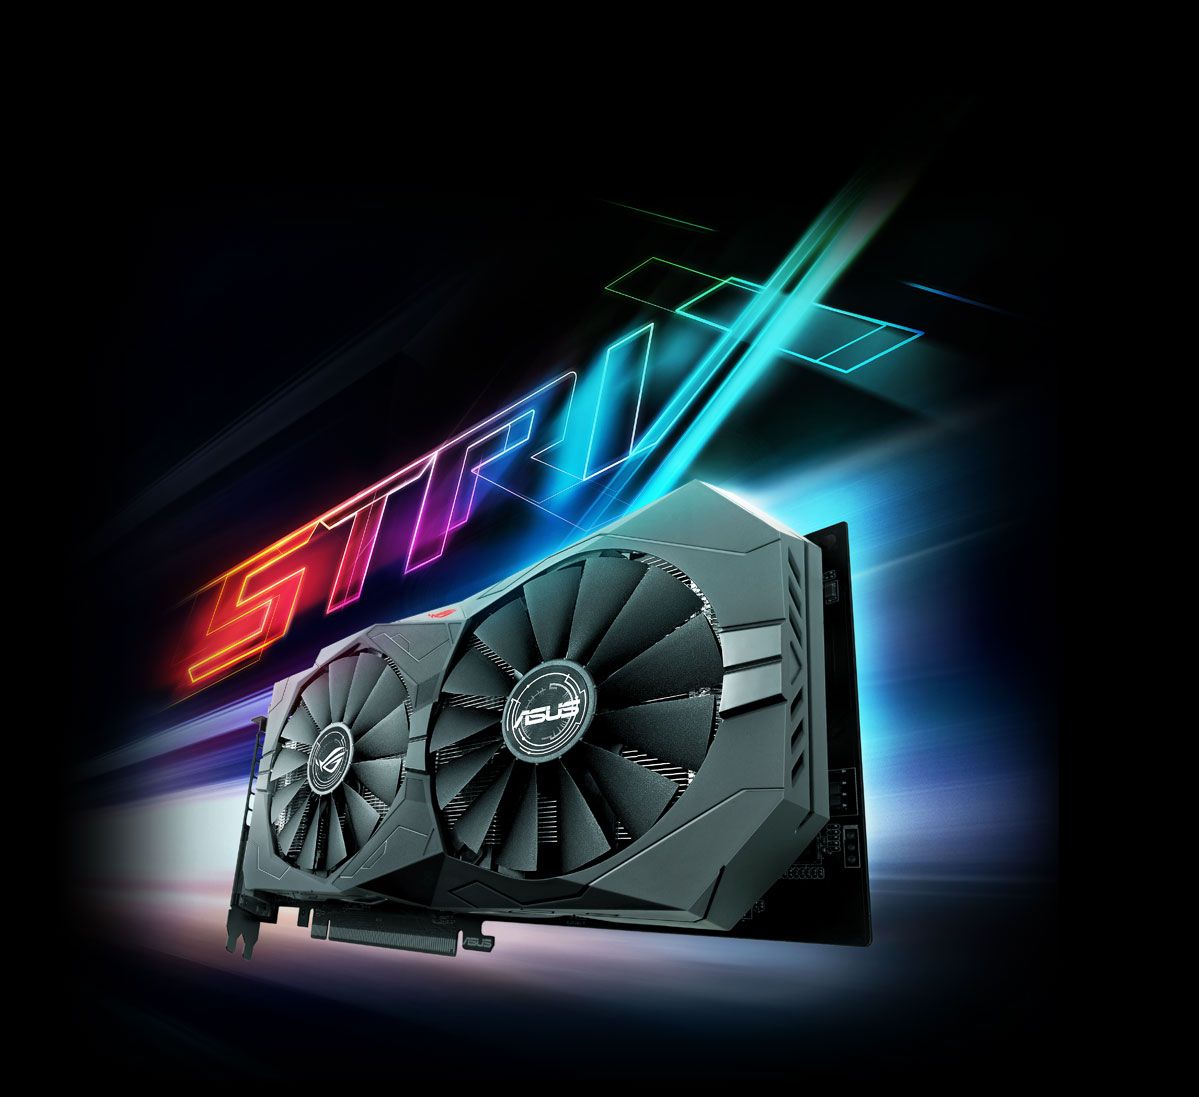 NVIDIA GeForce GTX 1650 Specs Confirmed, 896 Cores & 4 GB VRAM